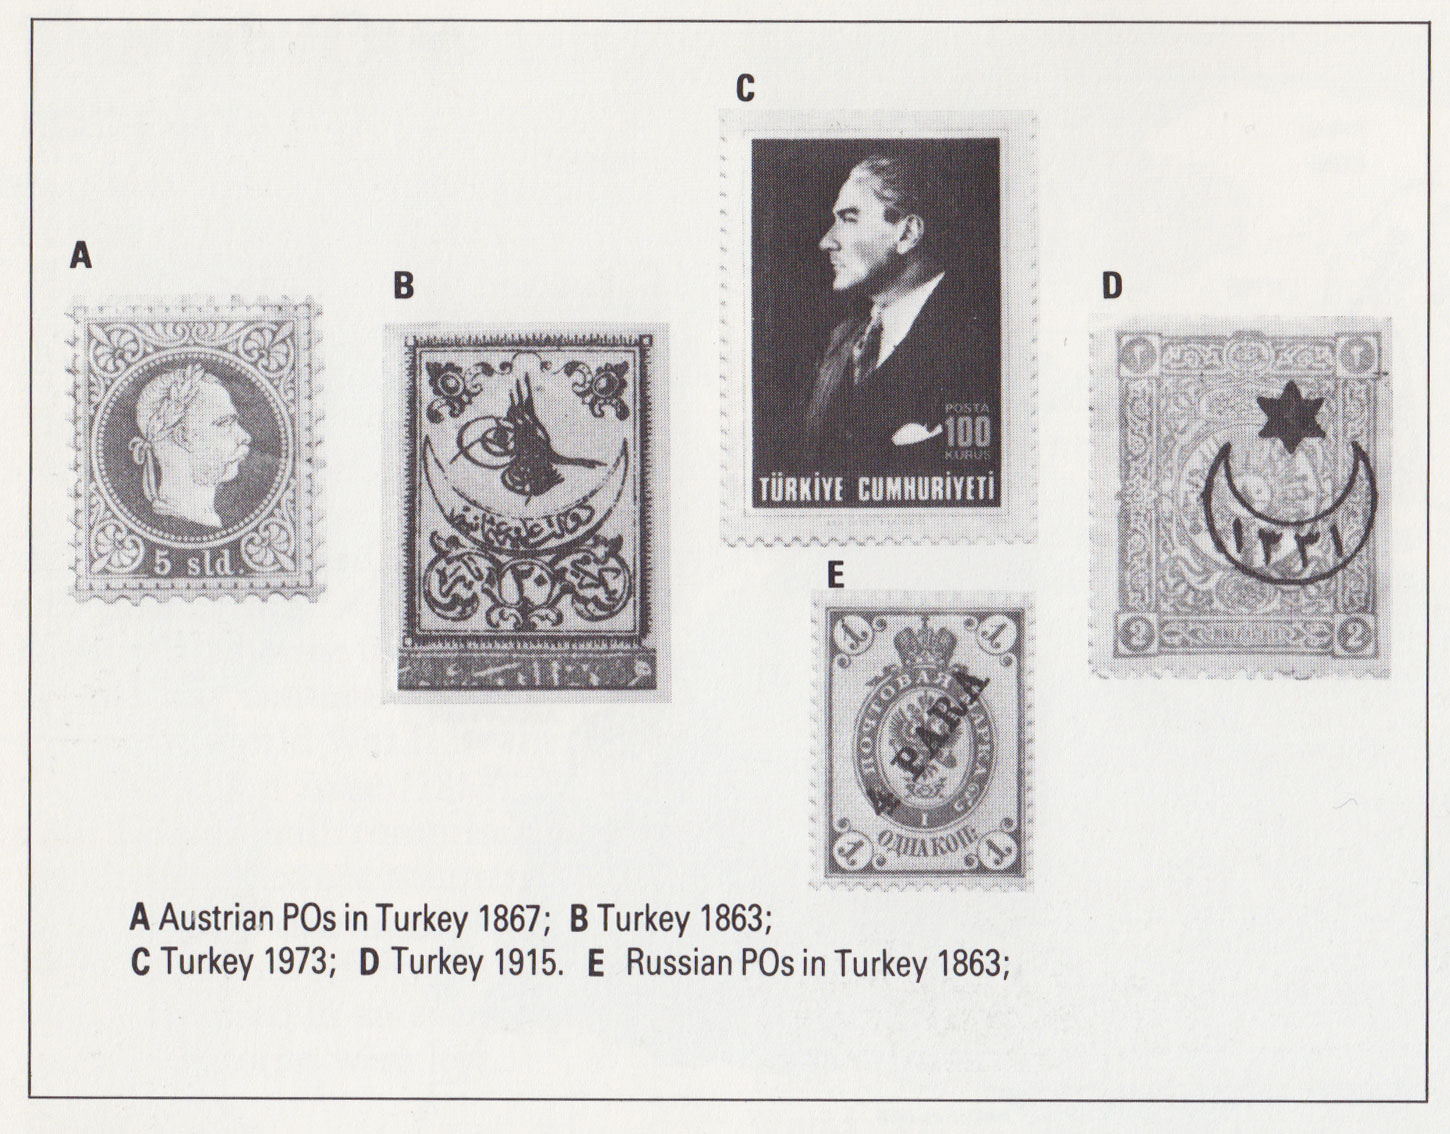 Rare Turkish stamps